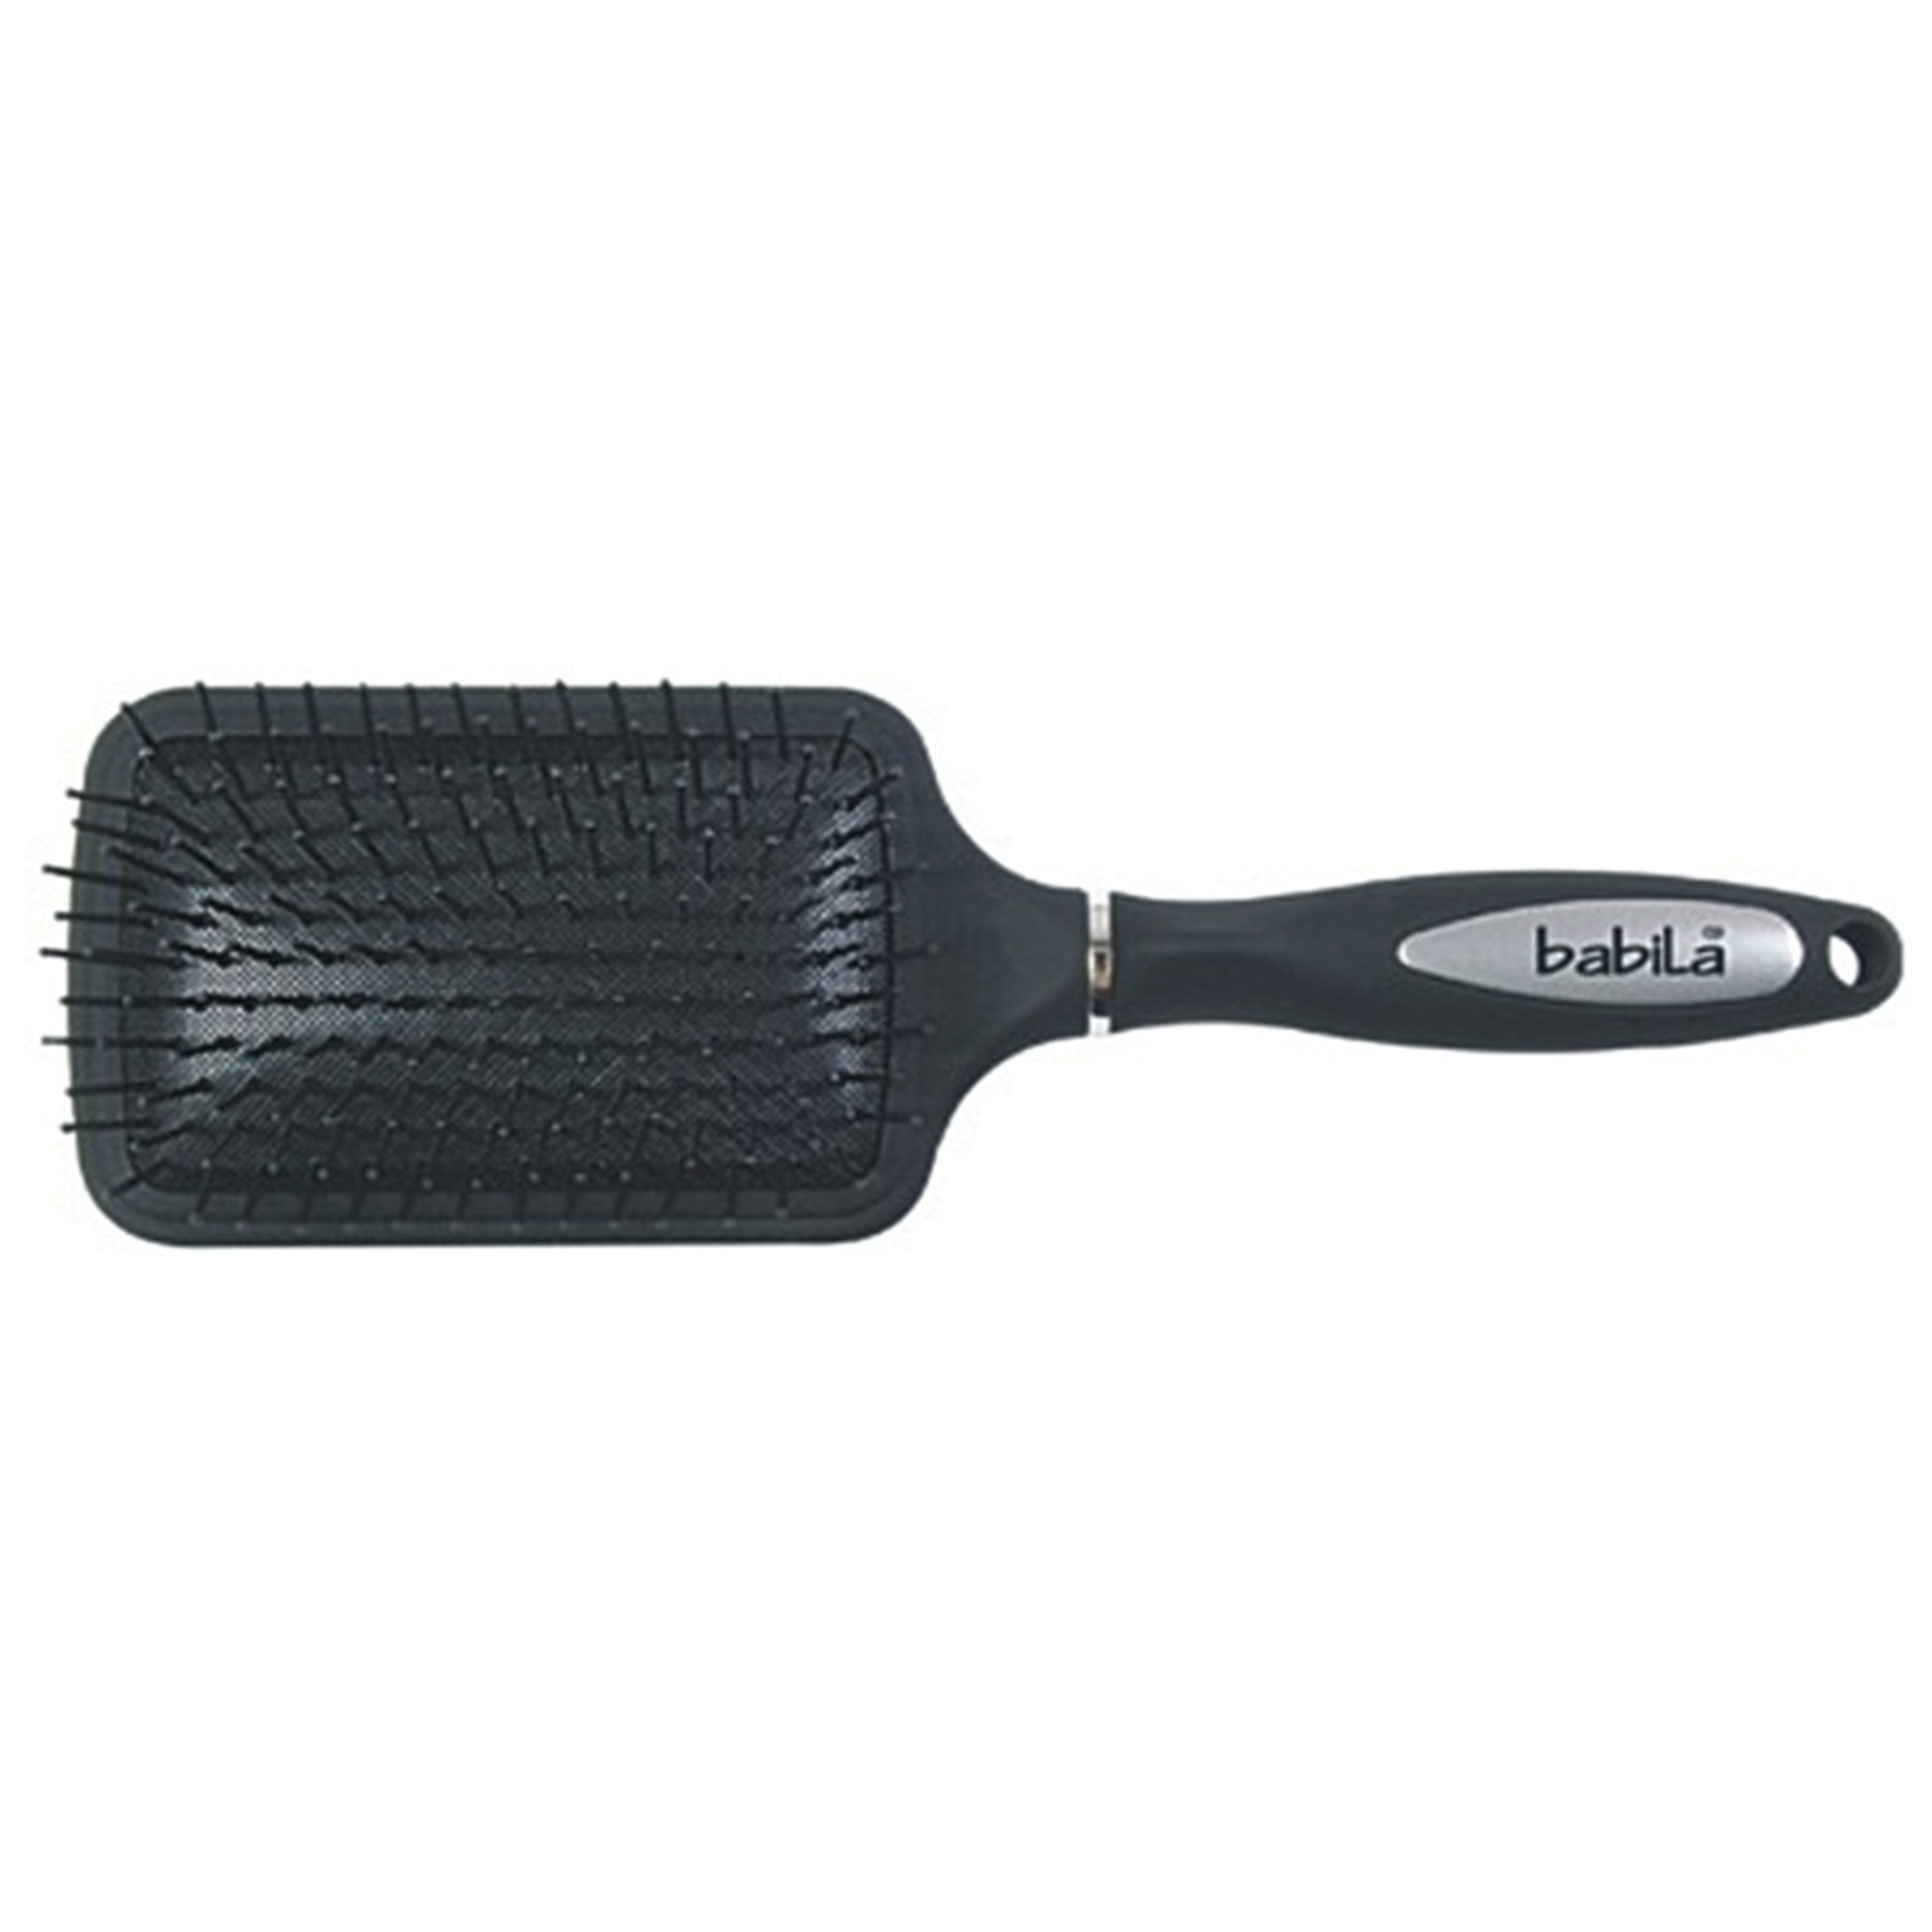 Paddle Brush – HB-V111 ₹360.00